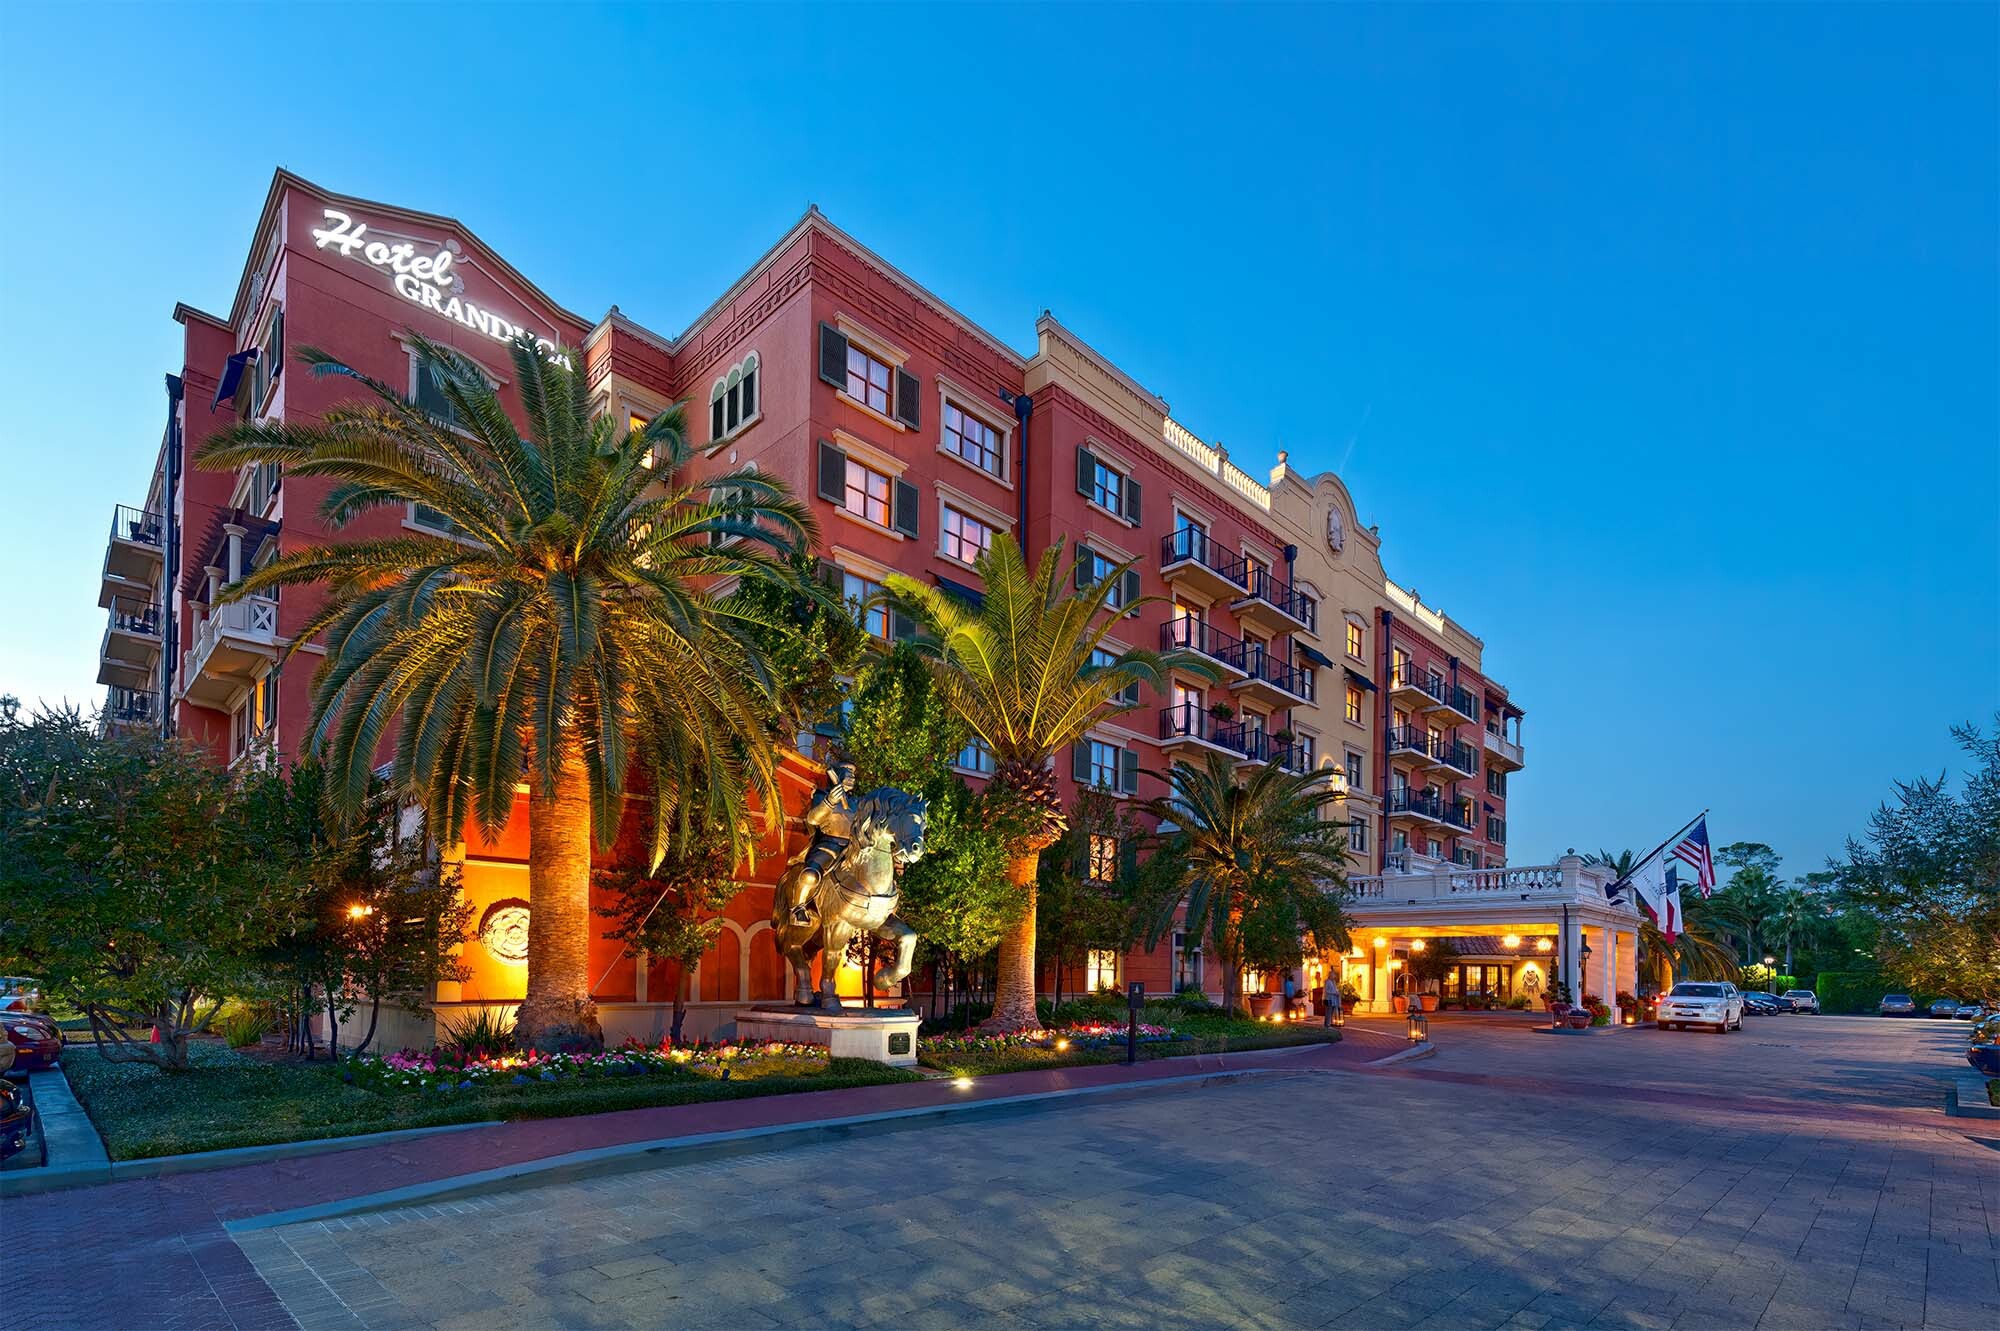 Photo of Hotel Granduca Houston, Houston, TX